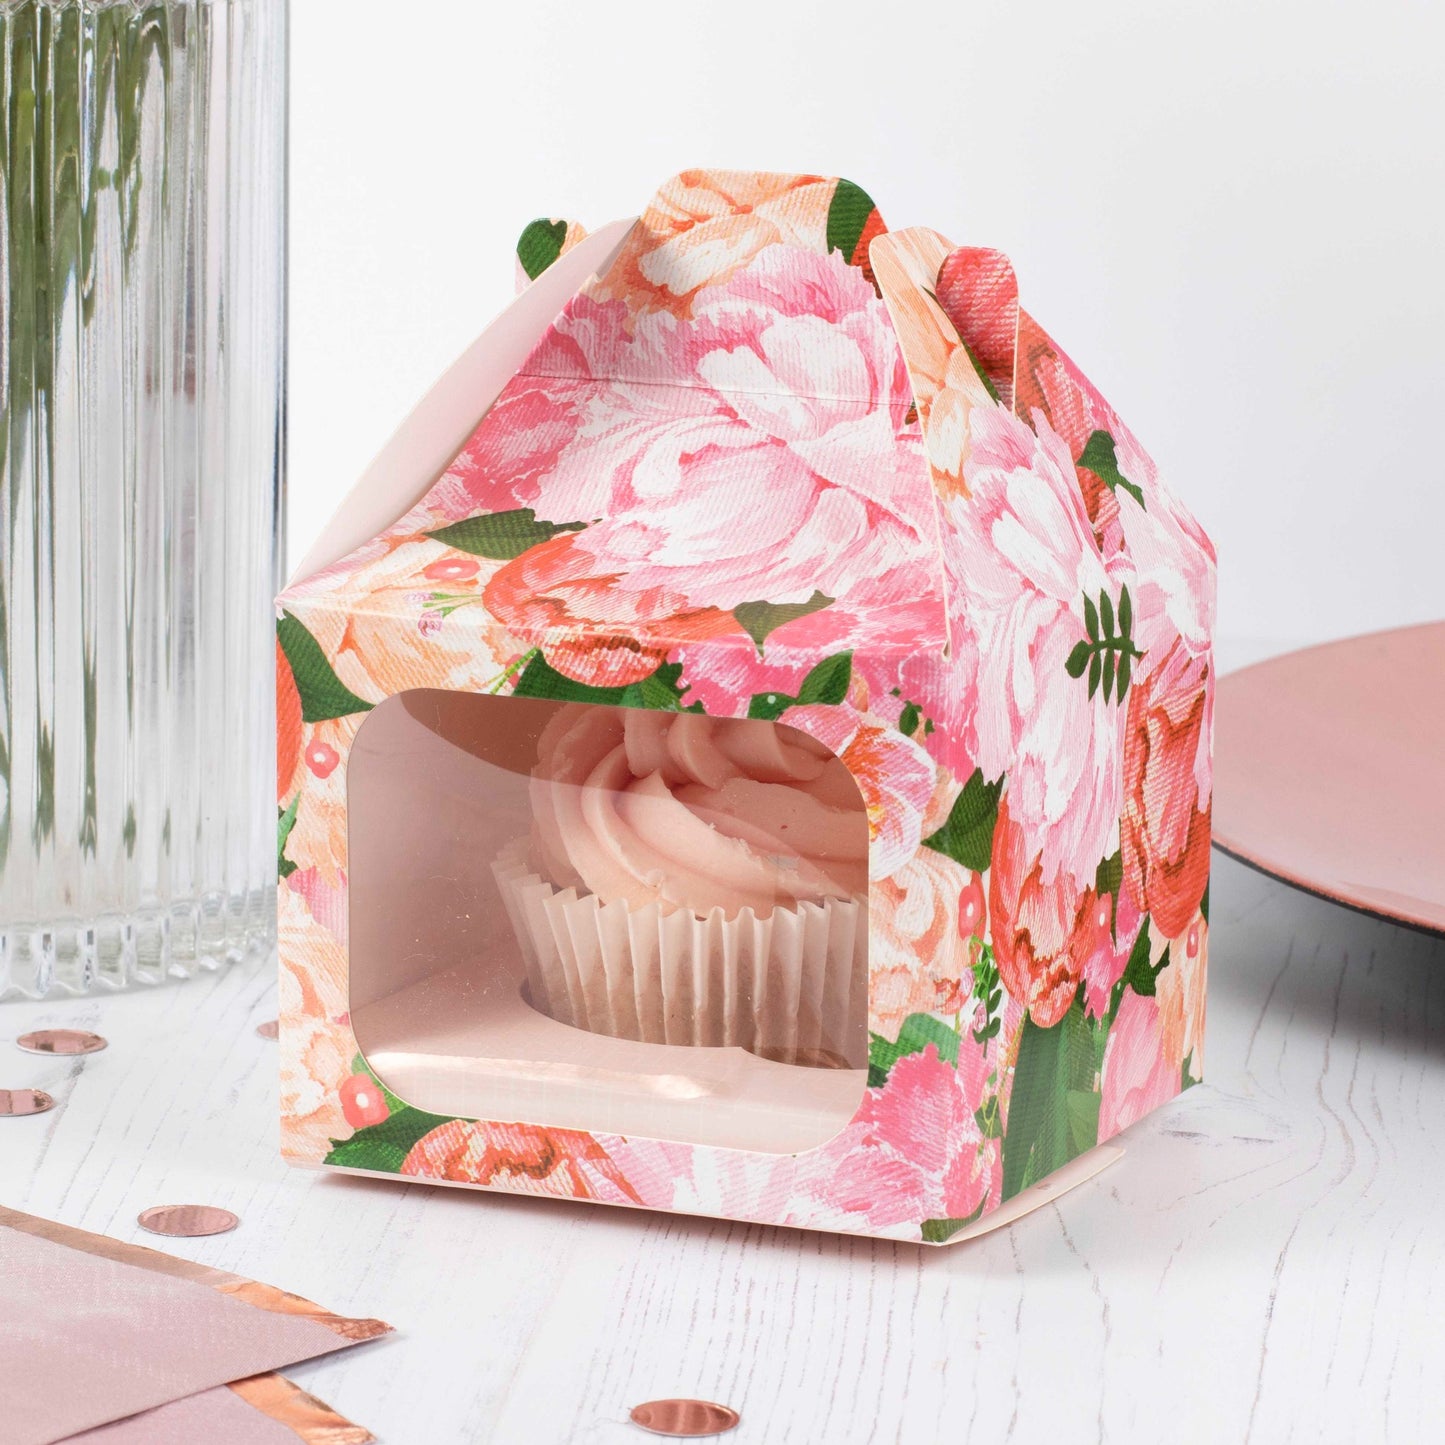 Caja de cupcakes individual floral